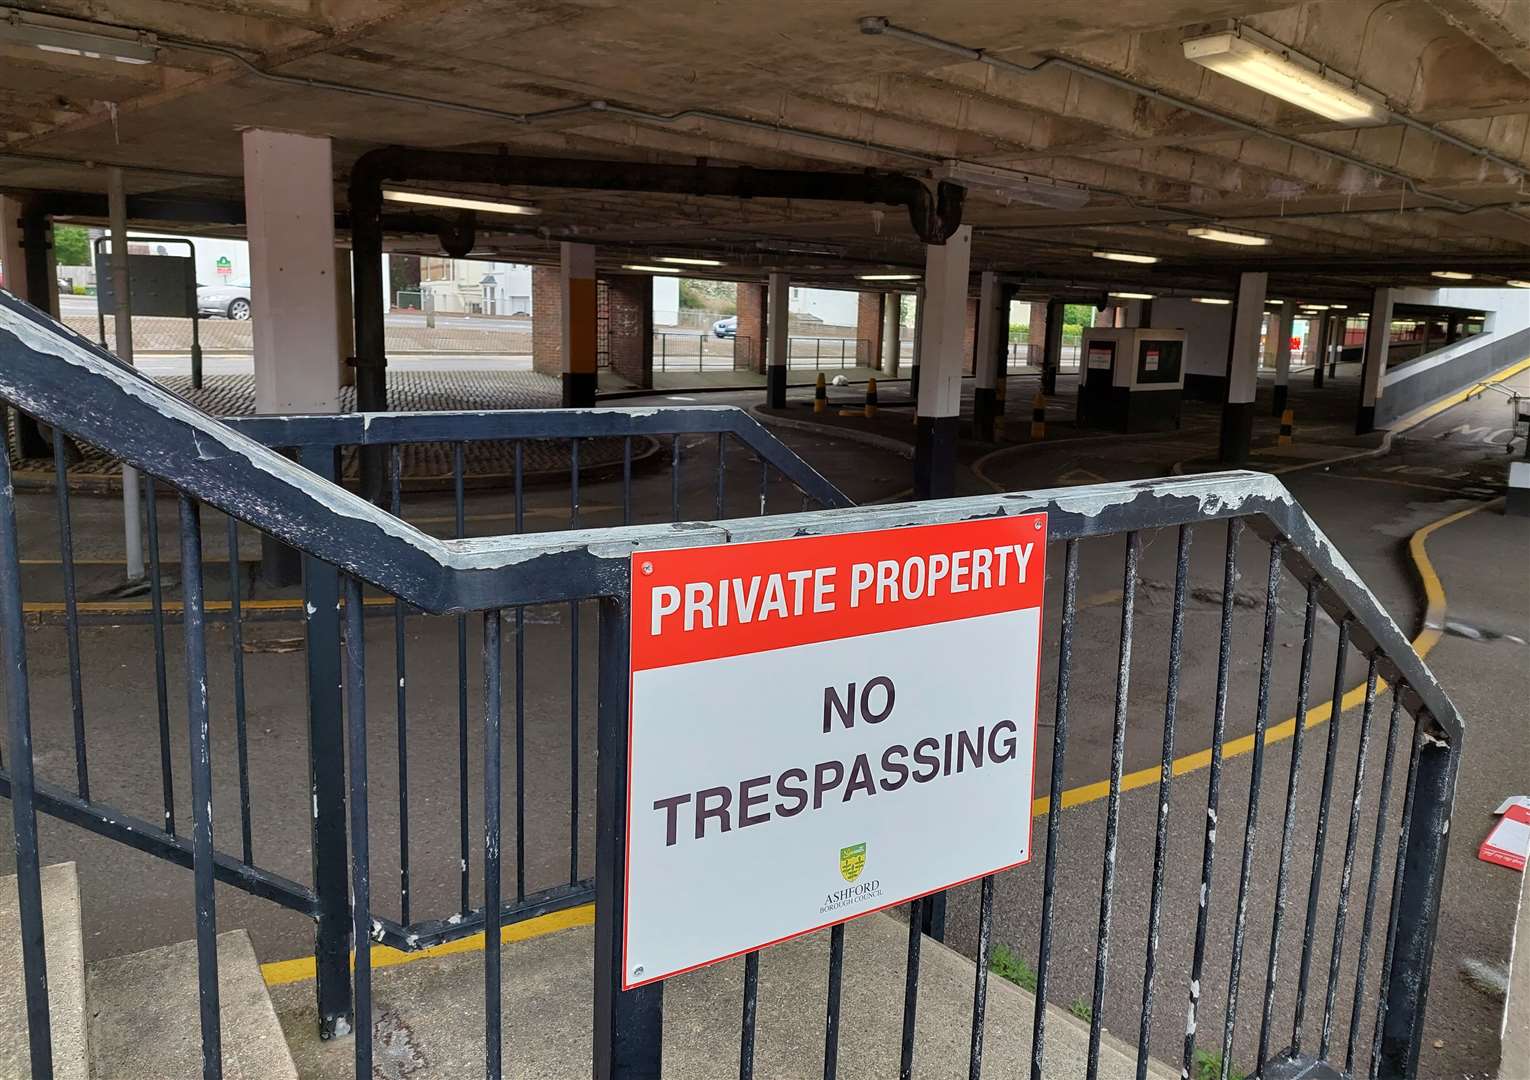 Ashford Borough Council has put up a number of 'no trespassing' signs around the car park